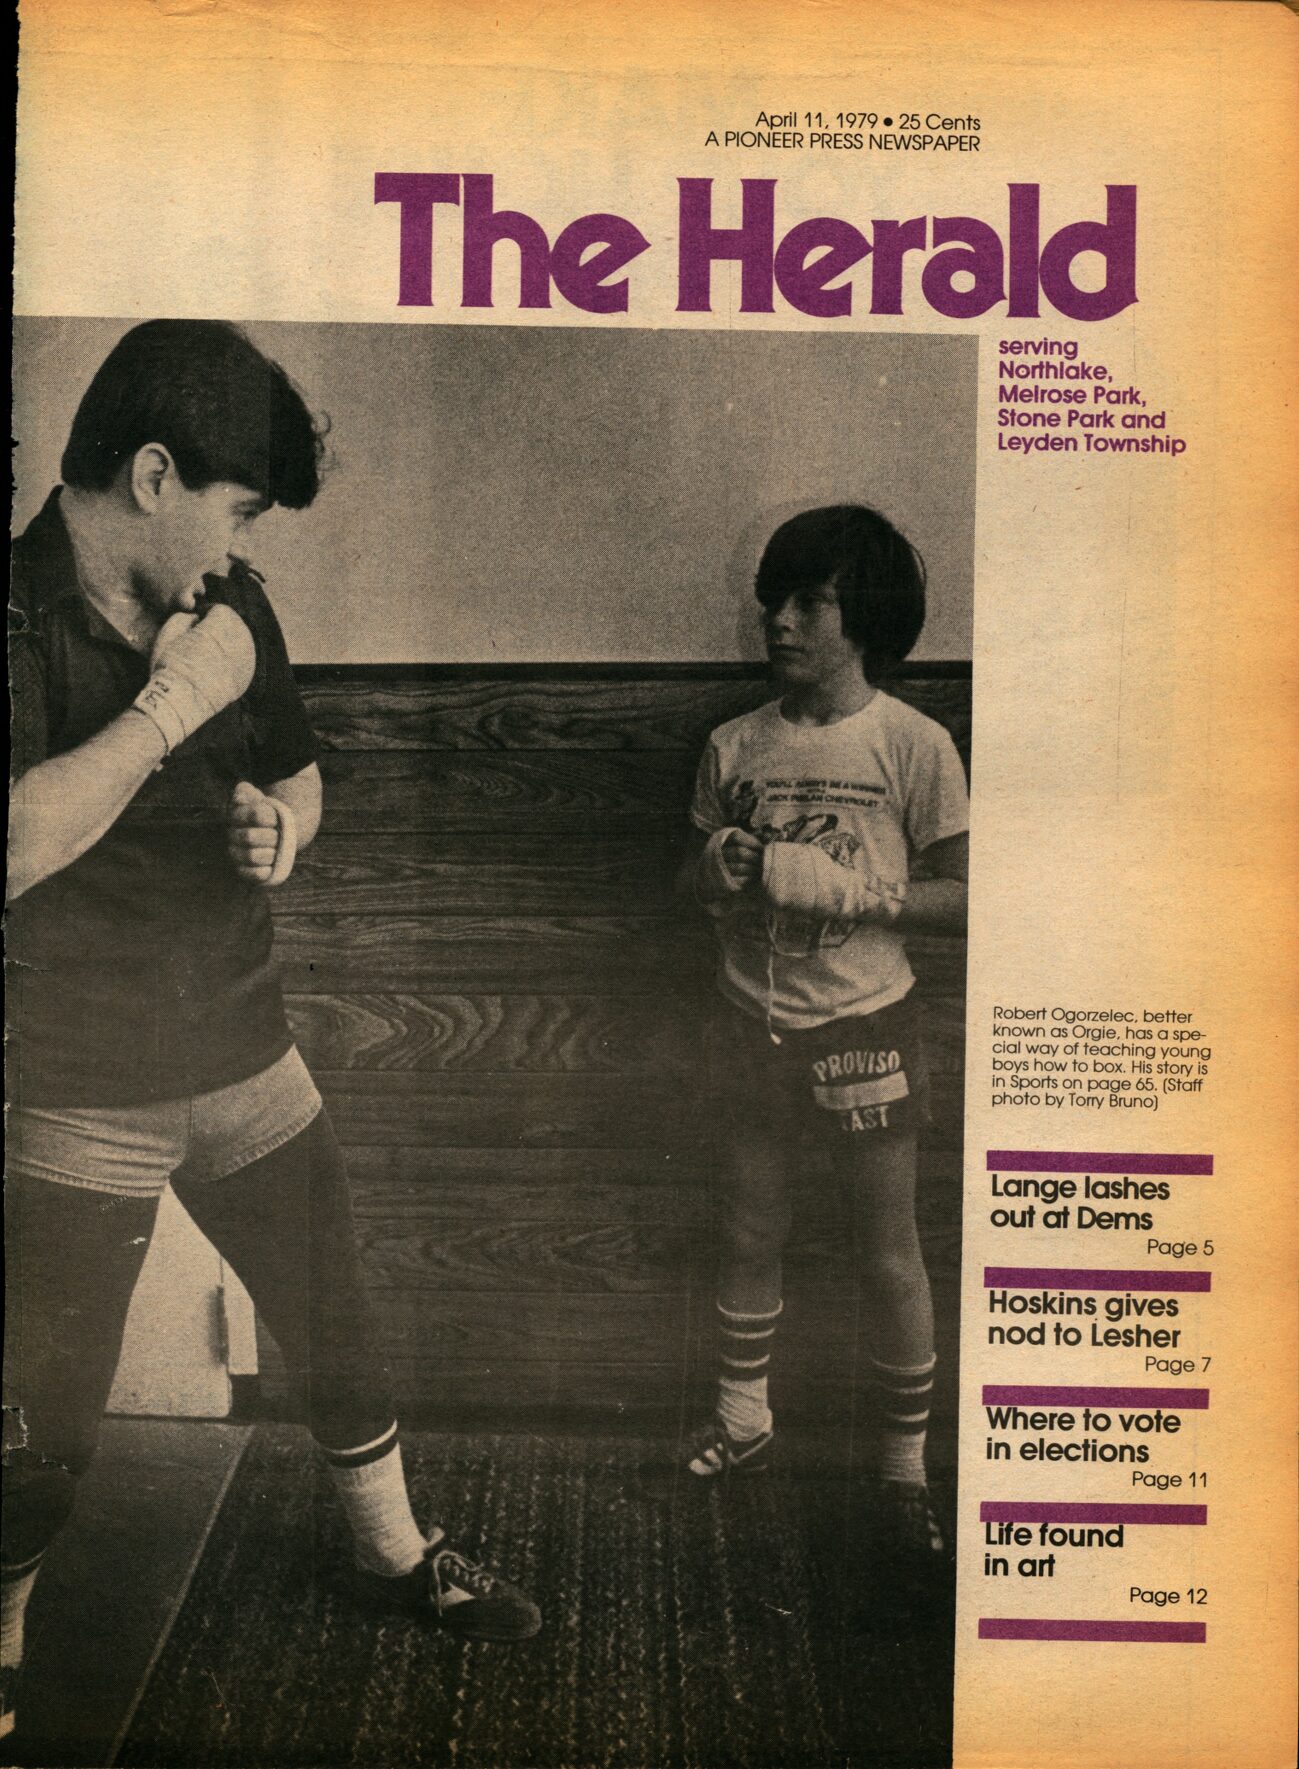 The Herald – 19790411